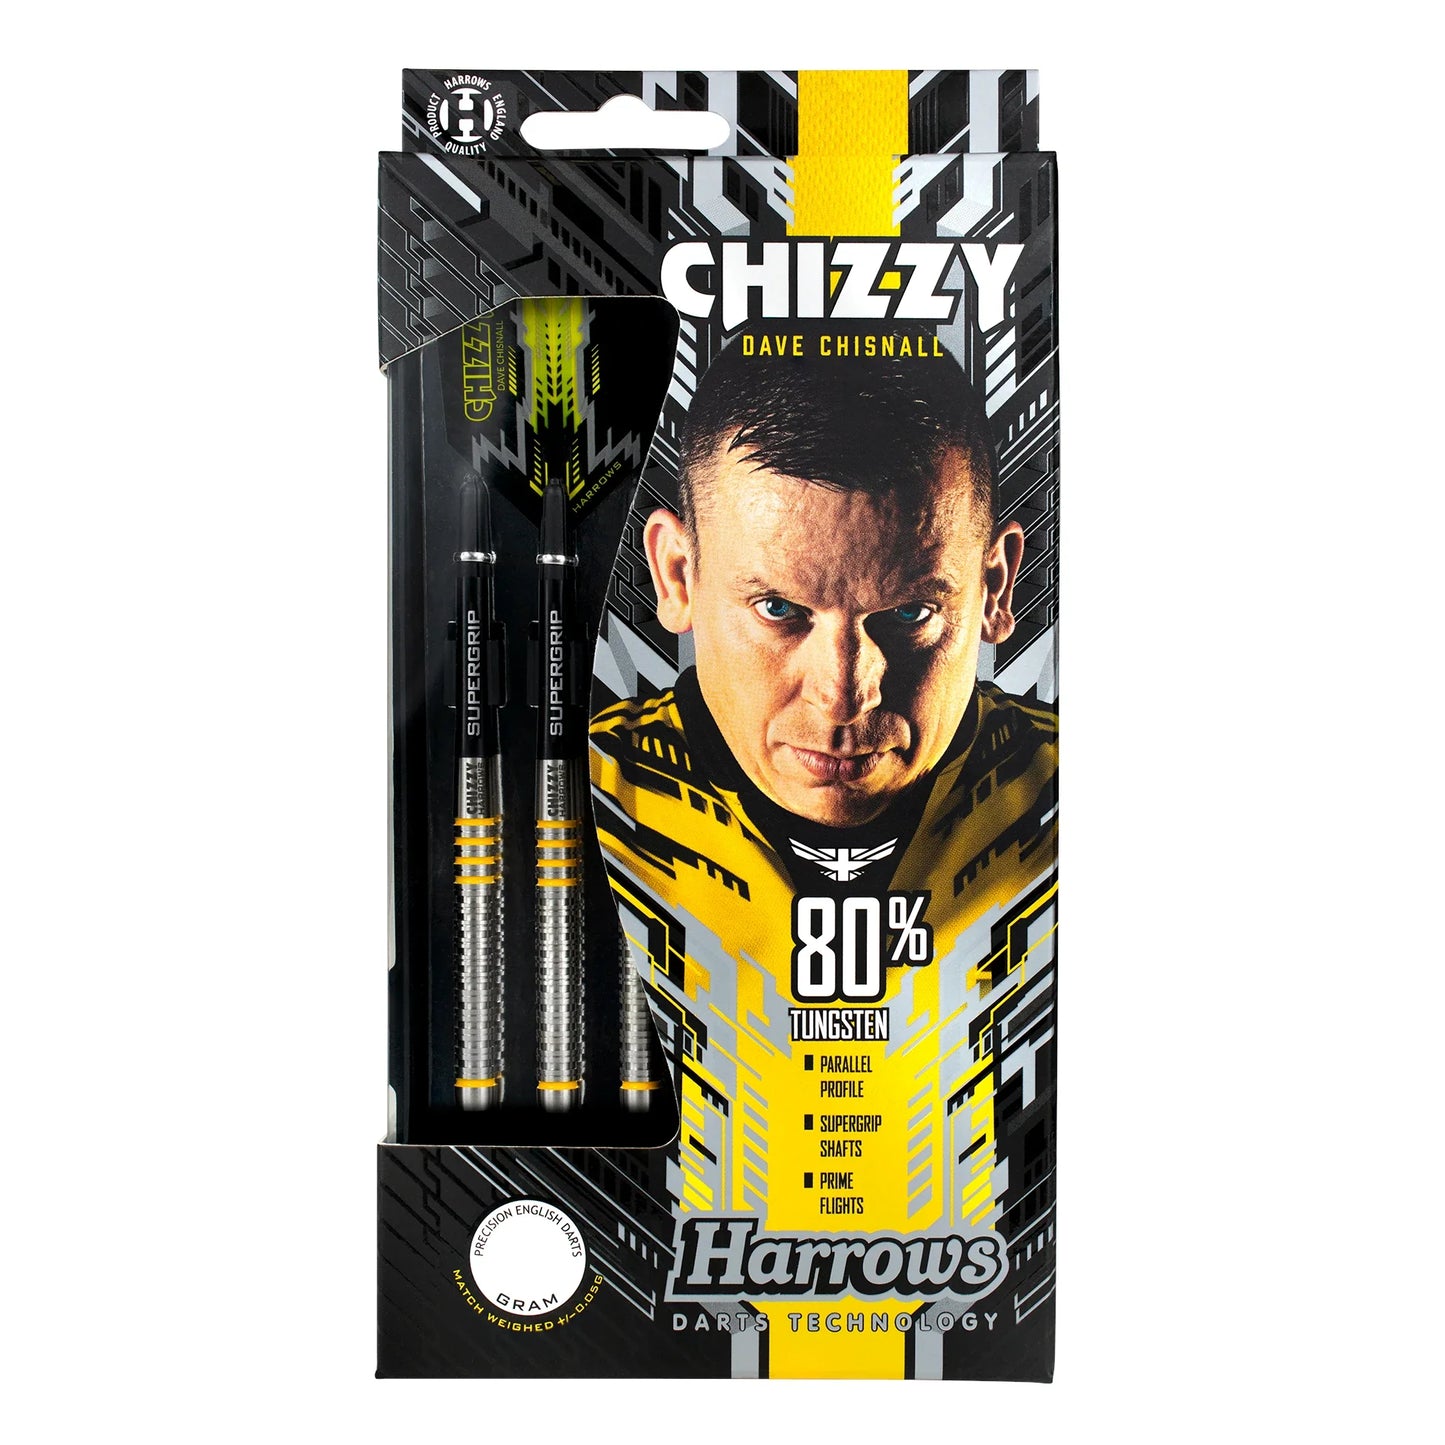 Harrows Chizzy 80 26g Darts